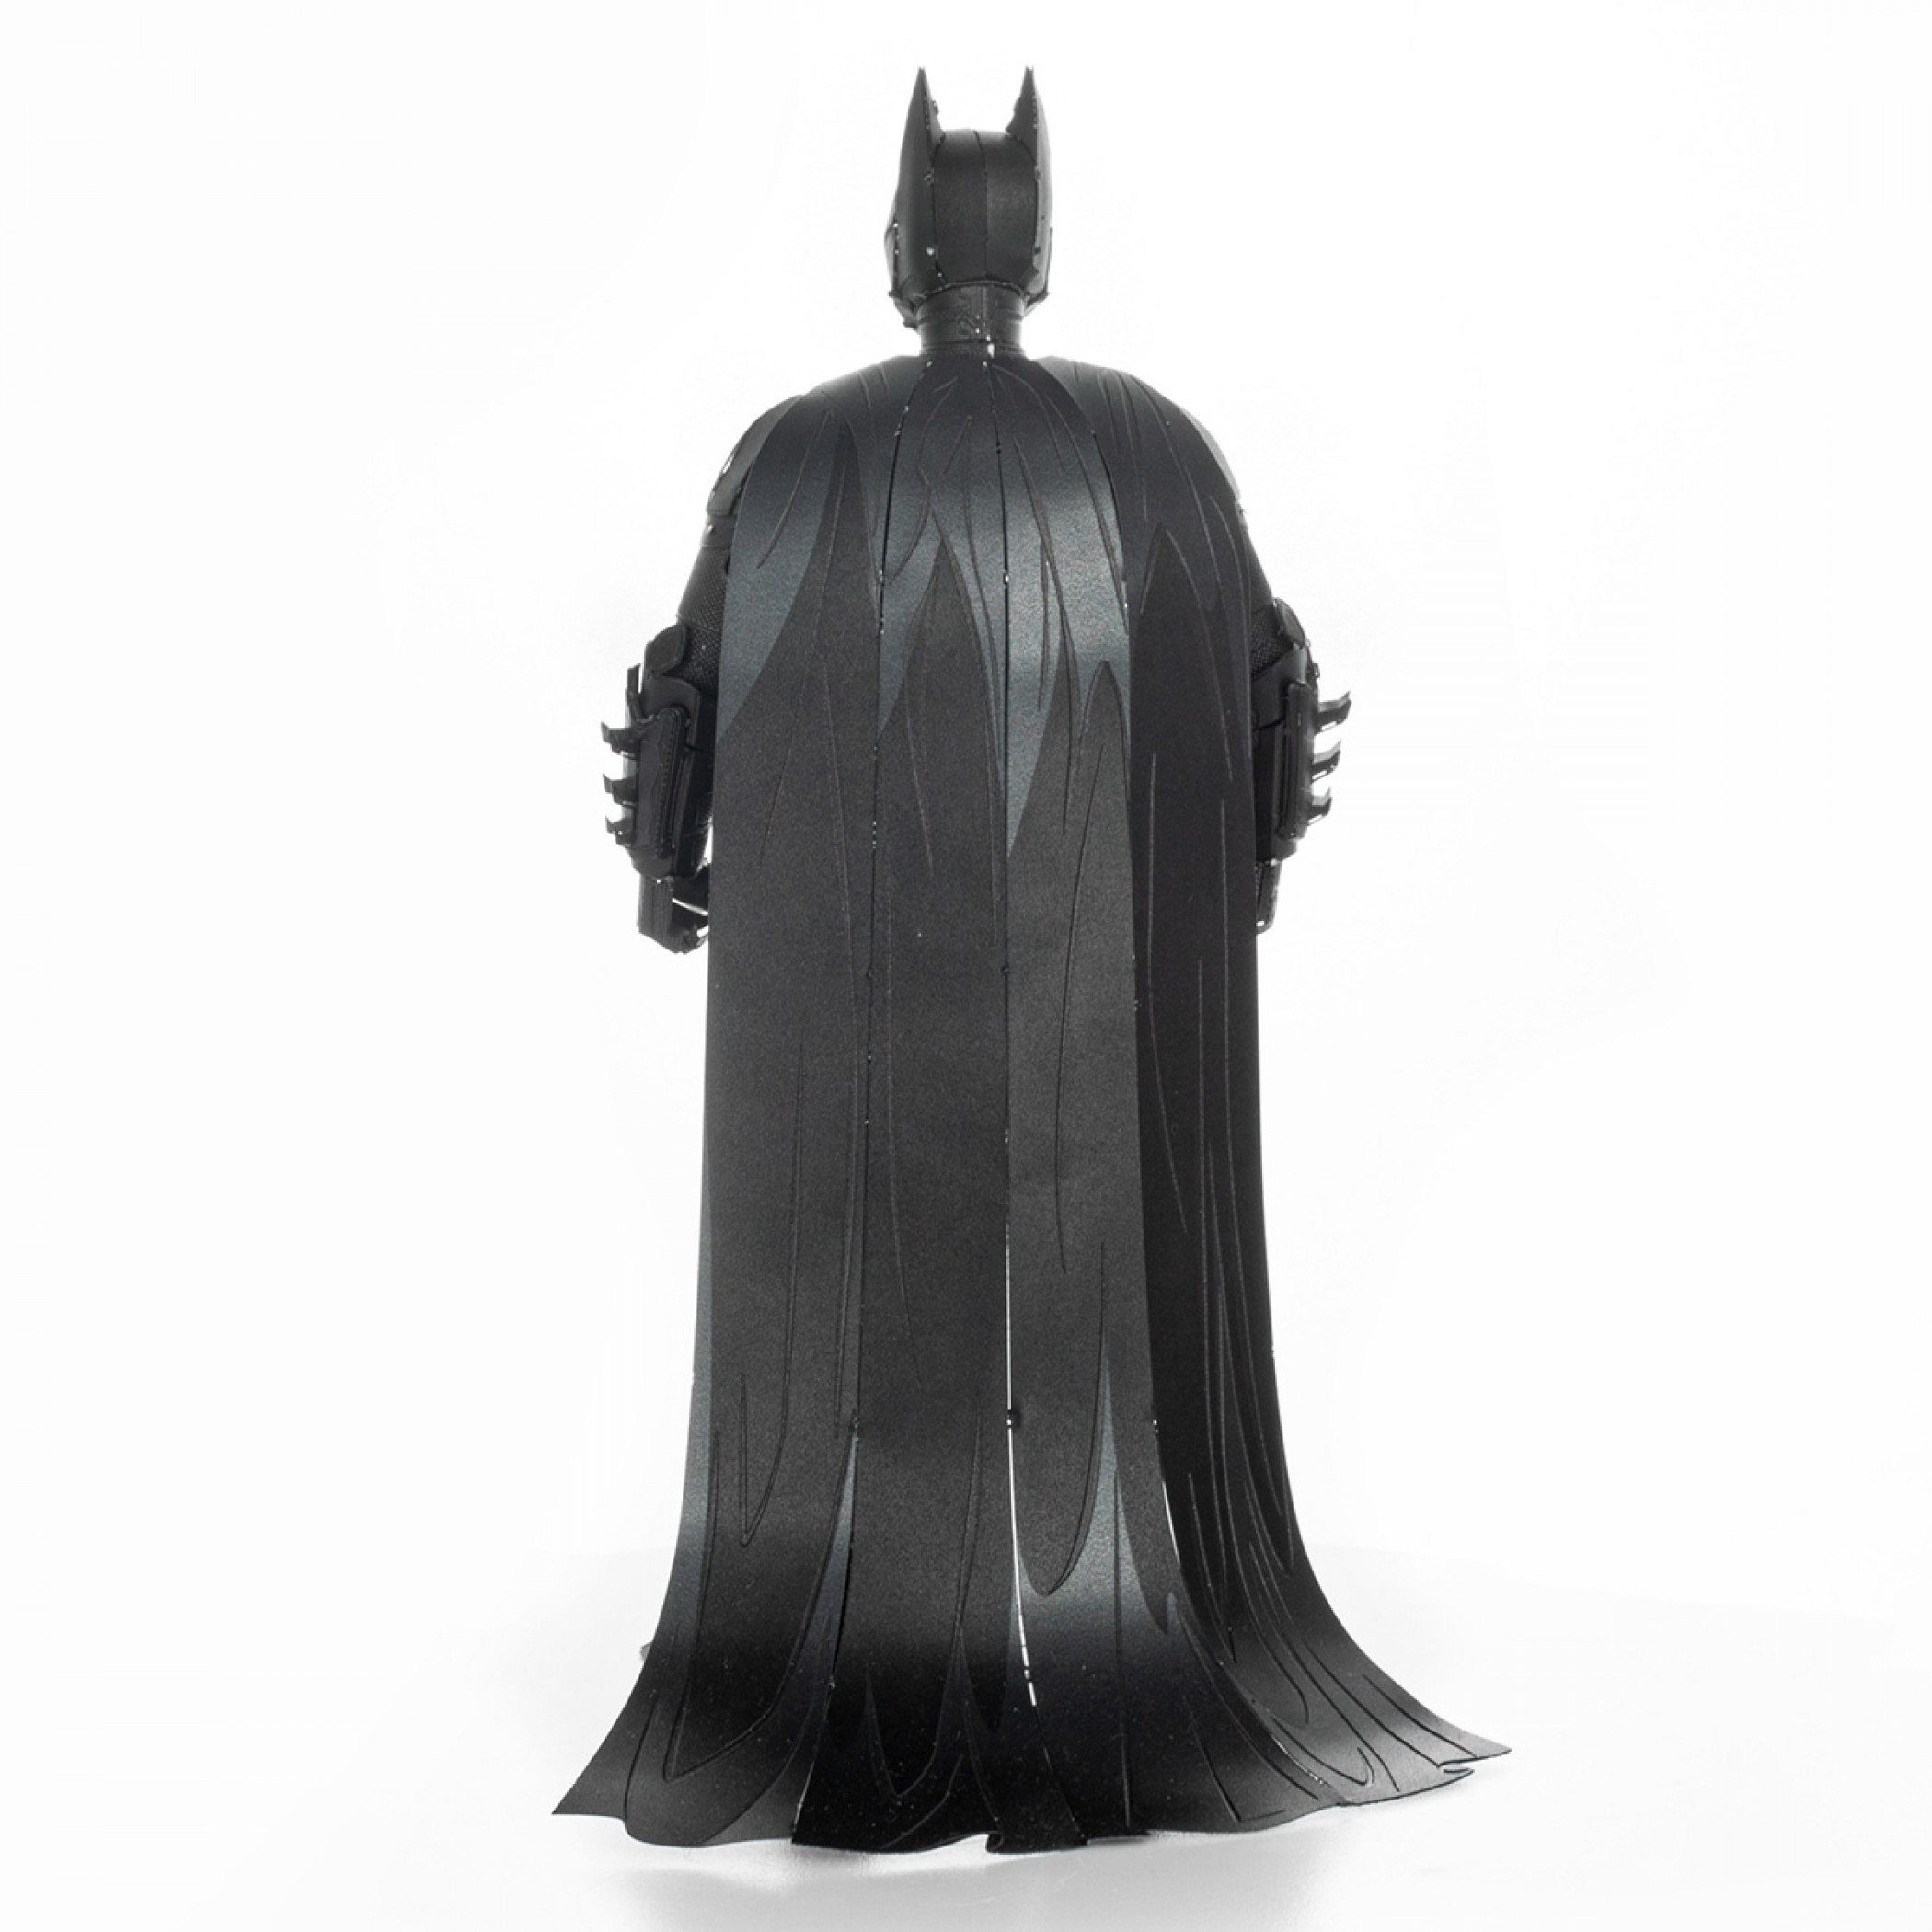 Batman The Dark Knight Premium 3D Metal Earth Model Kit